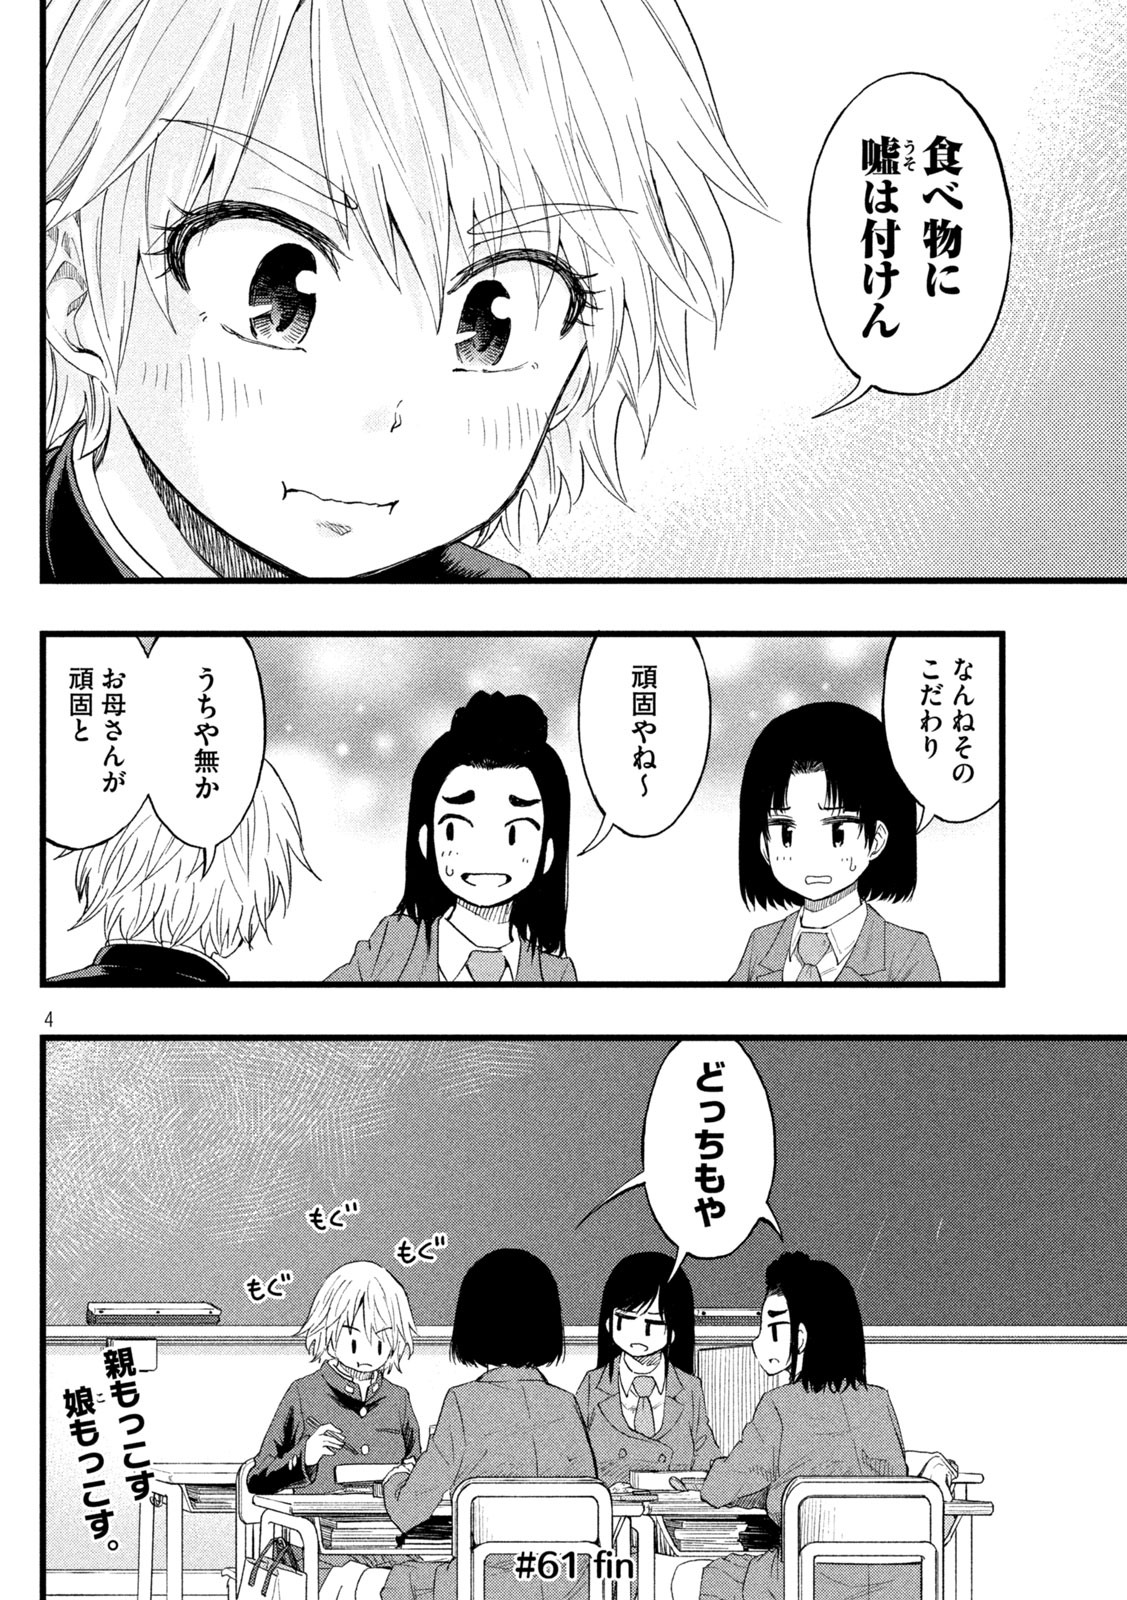 Koharu haru! - Chapter 61 - Page 4